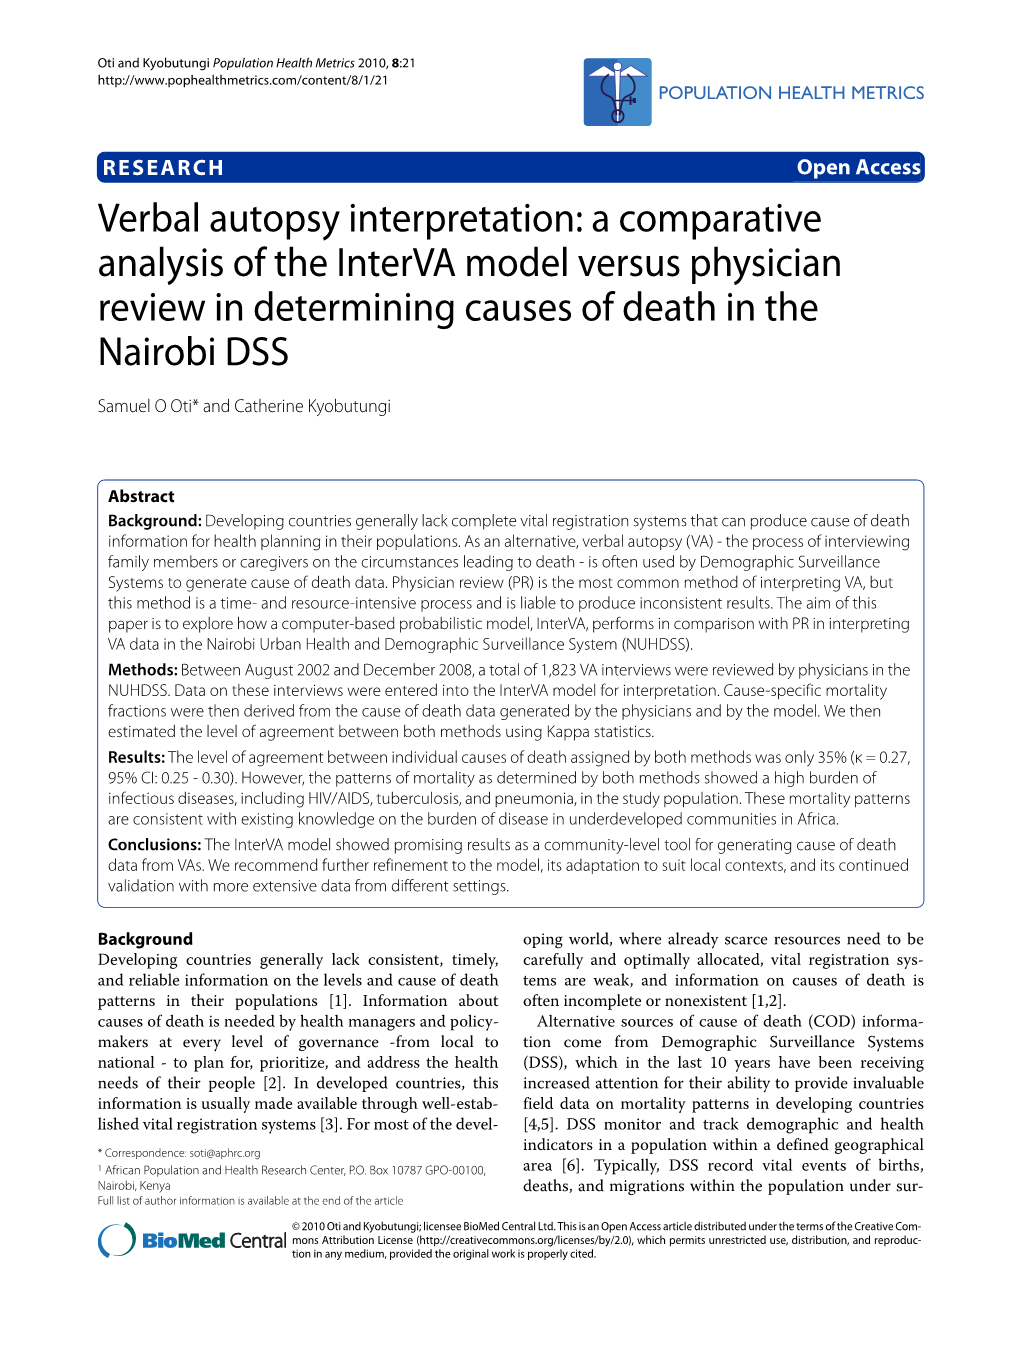 Verbal Autopsy Interpretation: a of the World Health Organization 2006, 84(3)